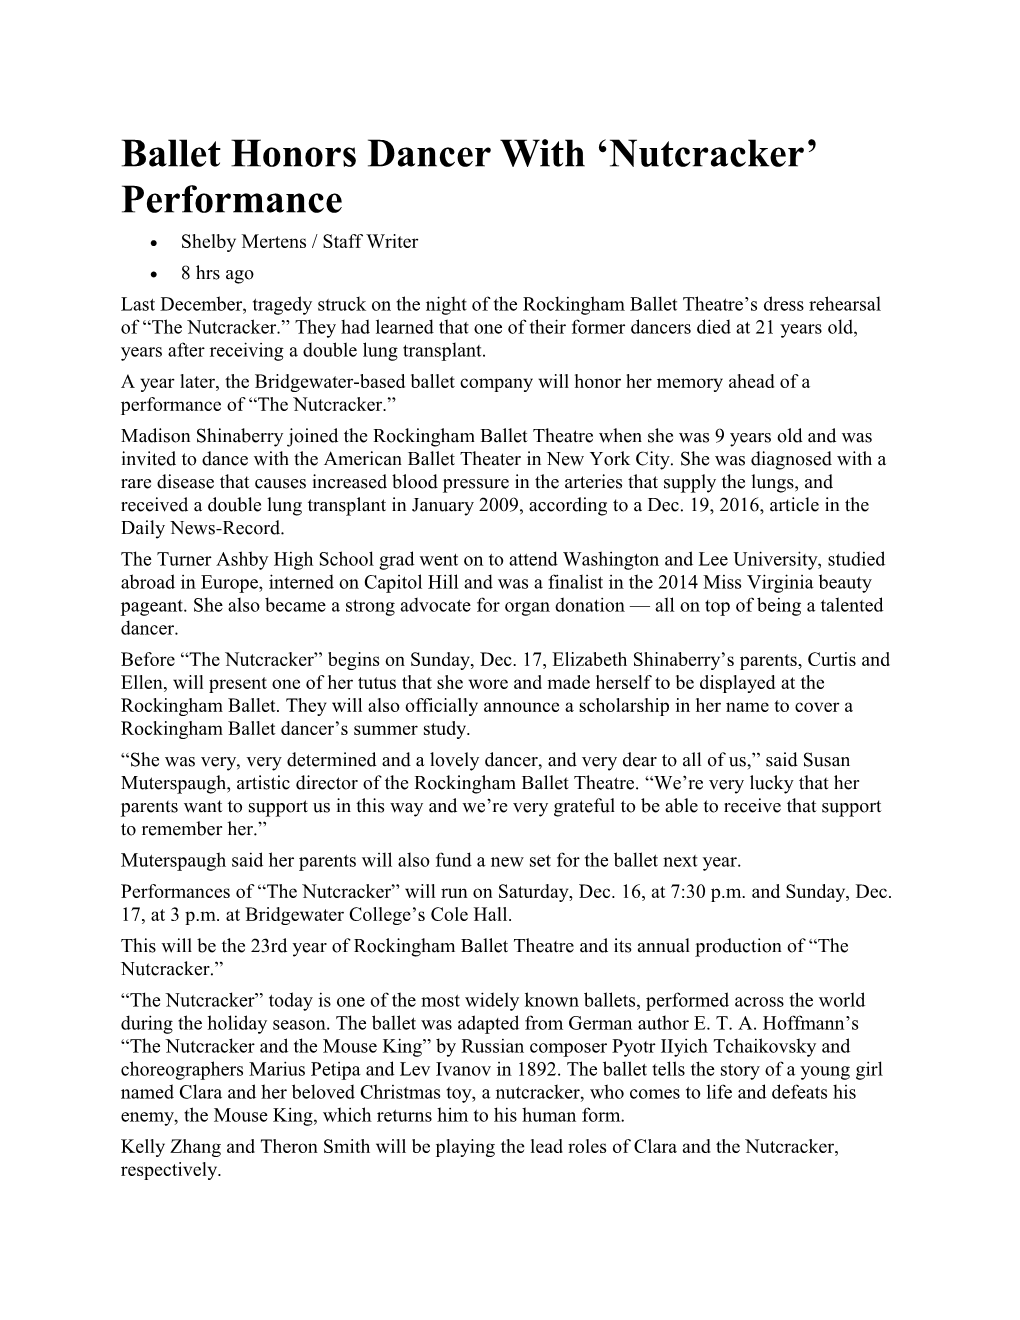 Ballet Honors Dancer with Nutcracker Performance